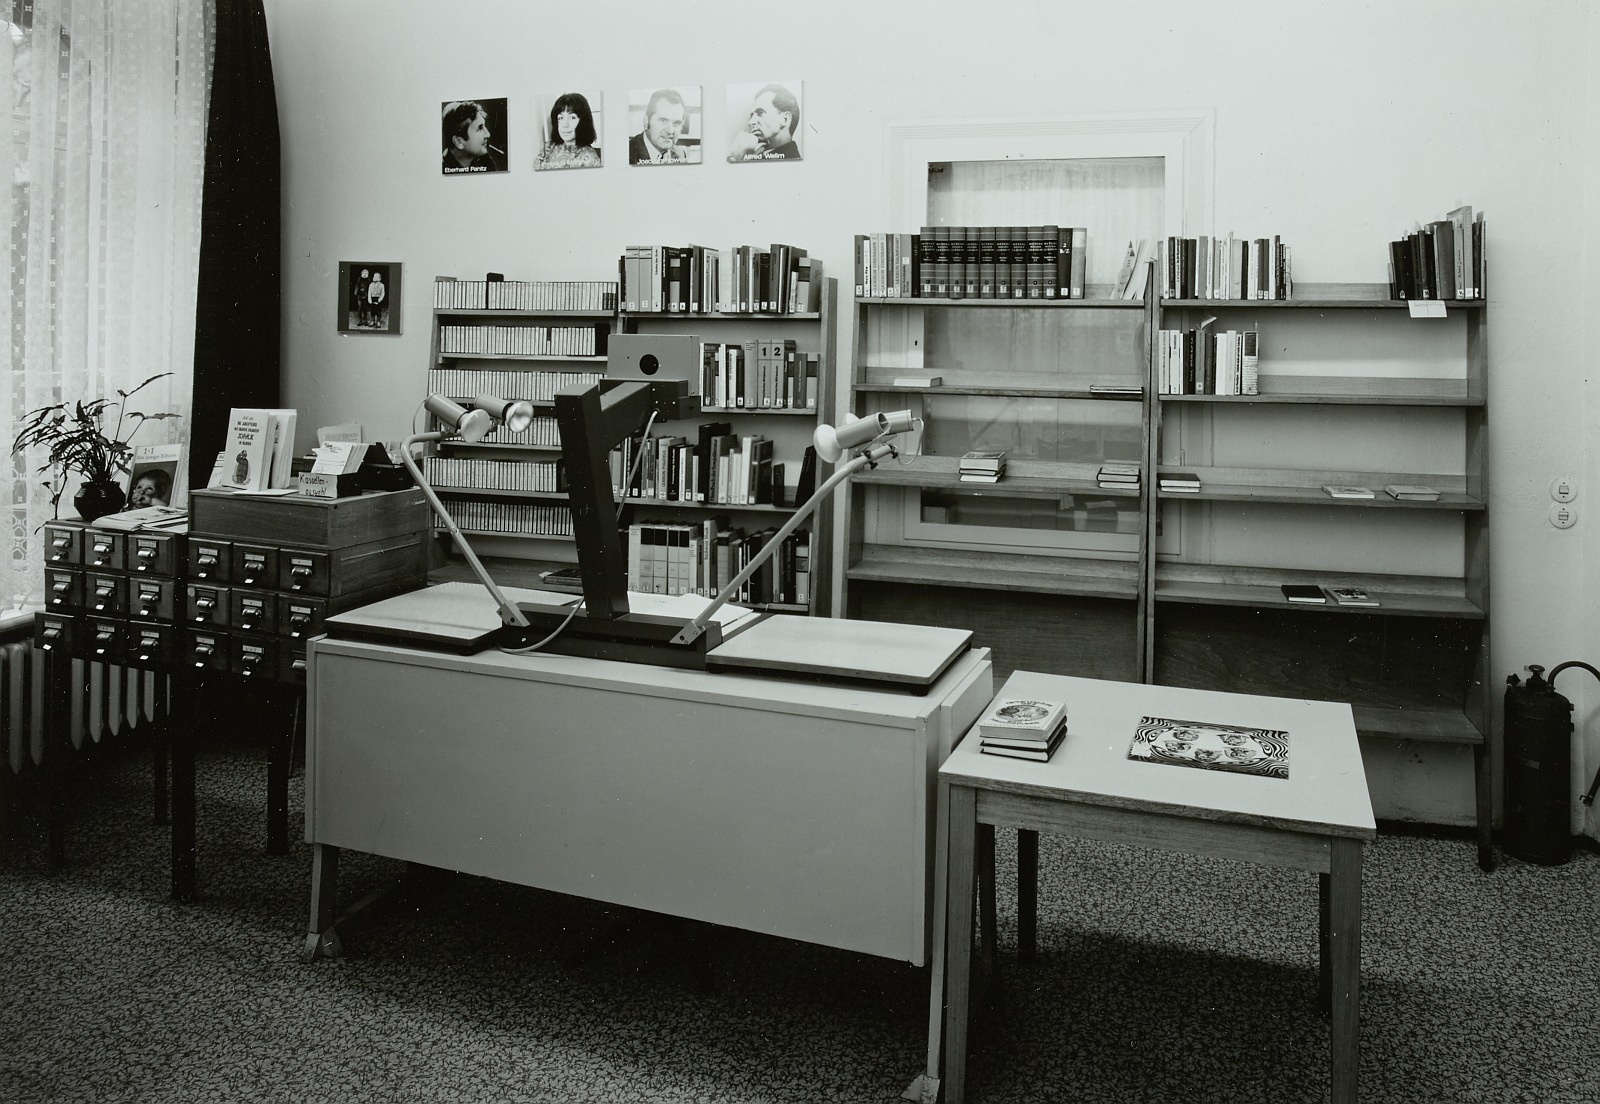 1981, Hans Reinecke: “Fotomechanische Verbuchung, Ausleihe Stadtbibliothek Plauen”, http://www.deutschefotothek.de/documents/obj/70017571